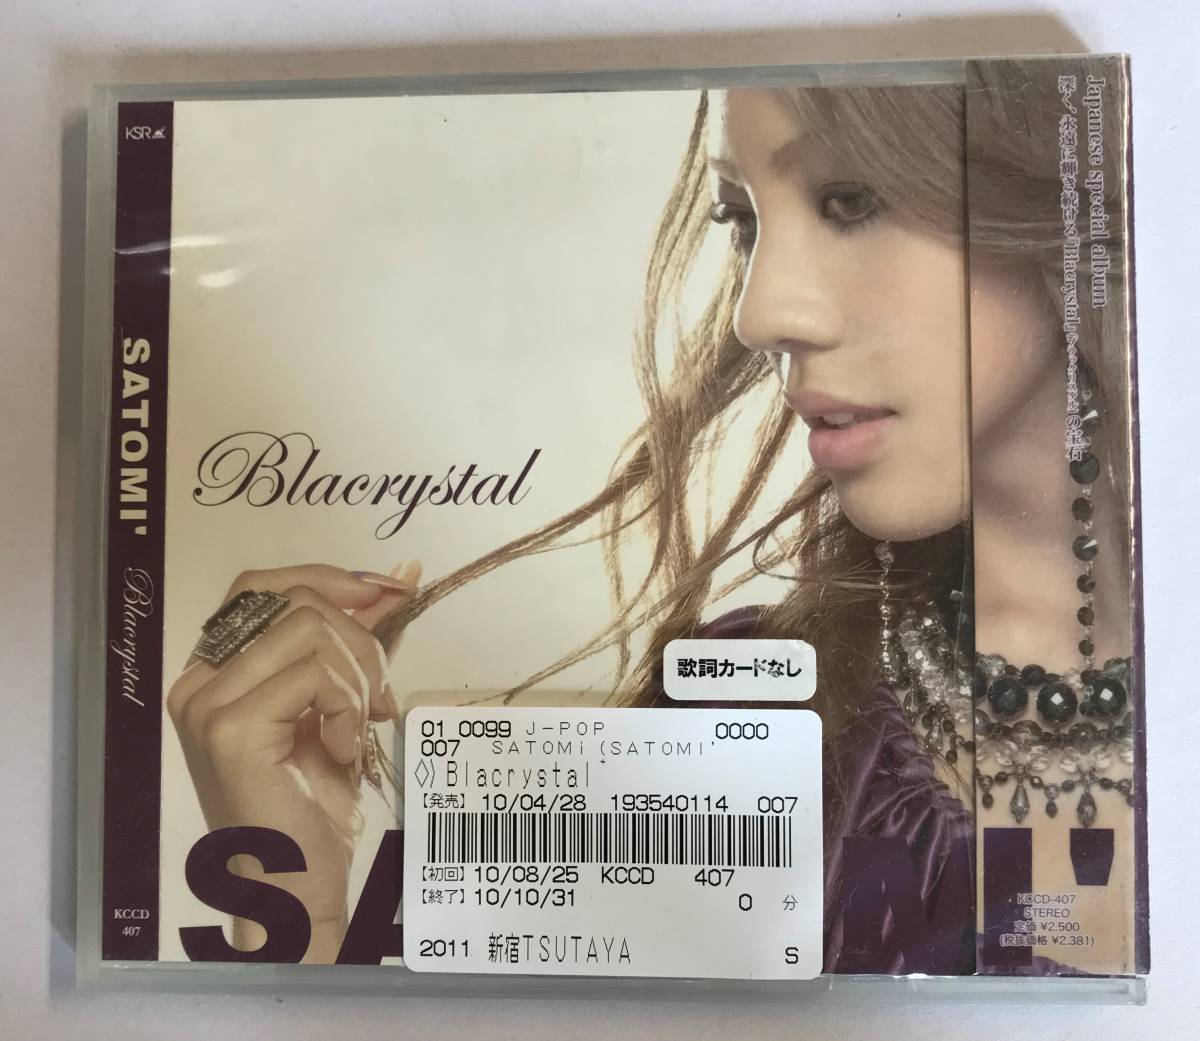 【CD】Satomi Blacrystal【レンタル落ち】@CD-07T@2